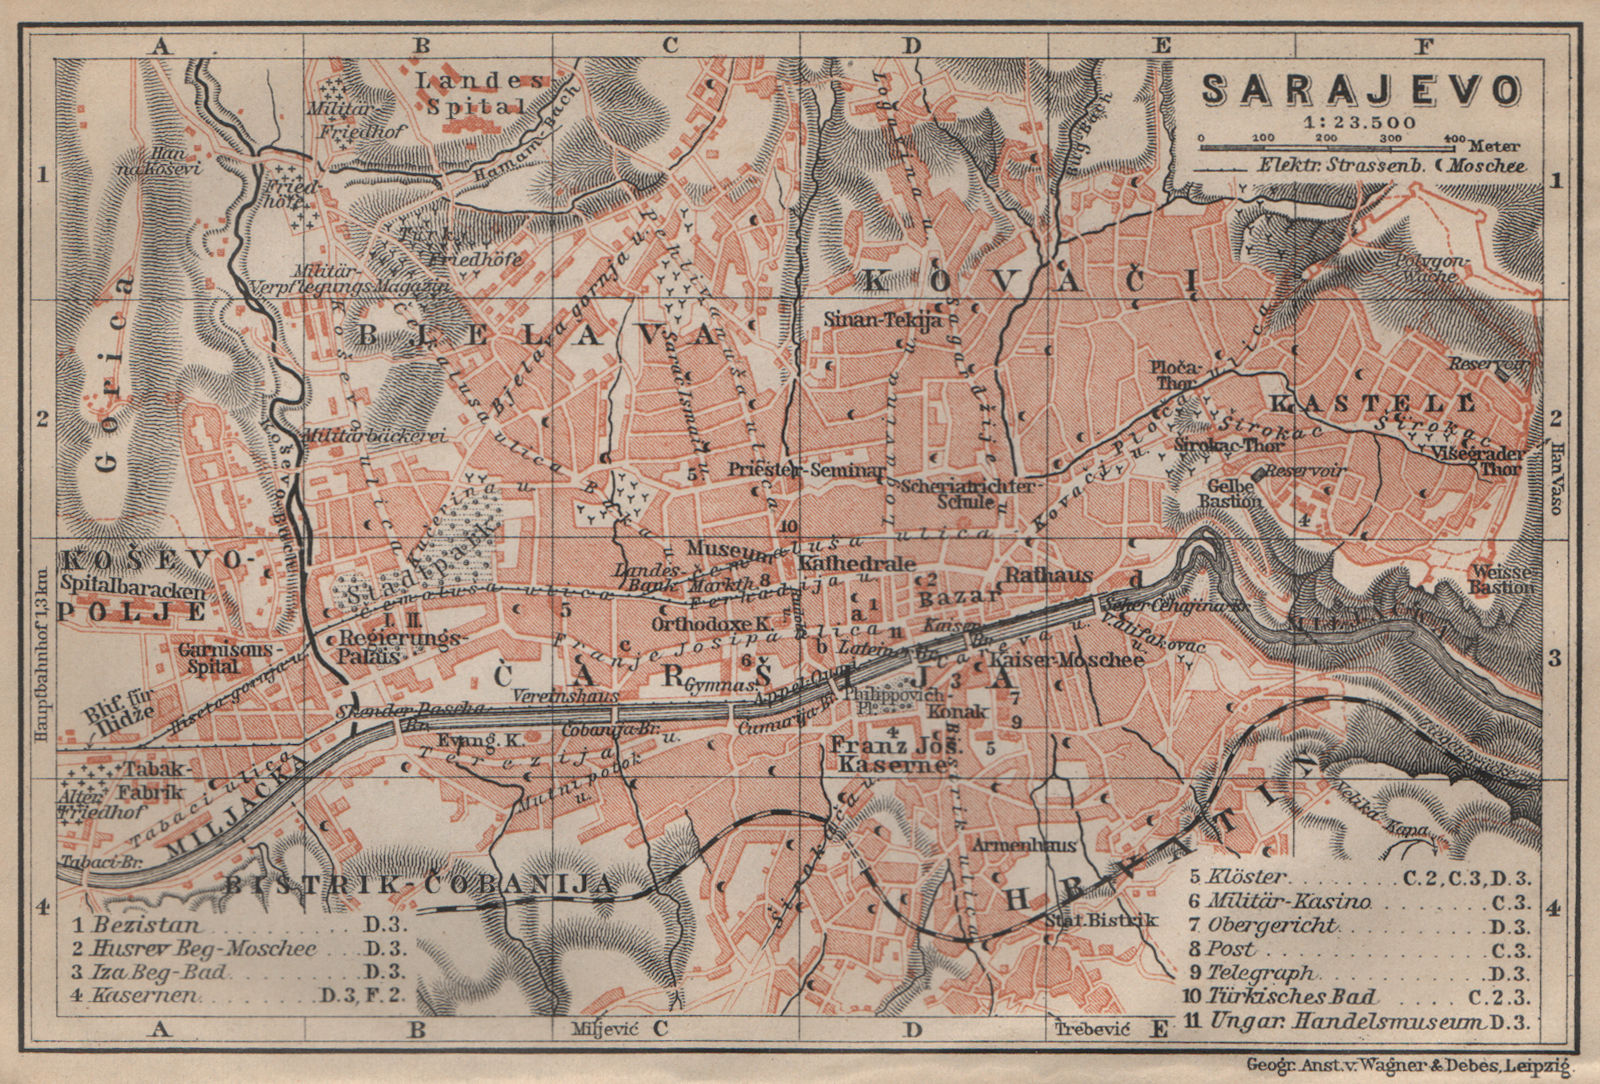 SARAJEVO antique town city plan. Bosnia Herzegovina karta. BAEDEKER 1905 map